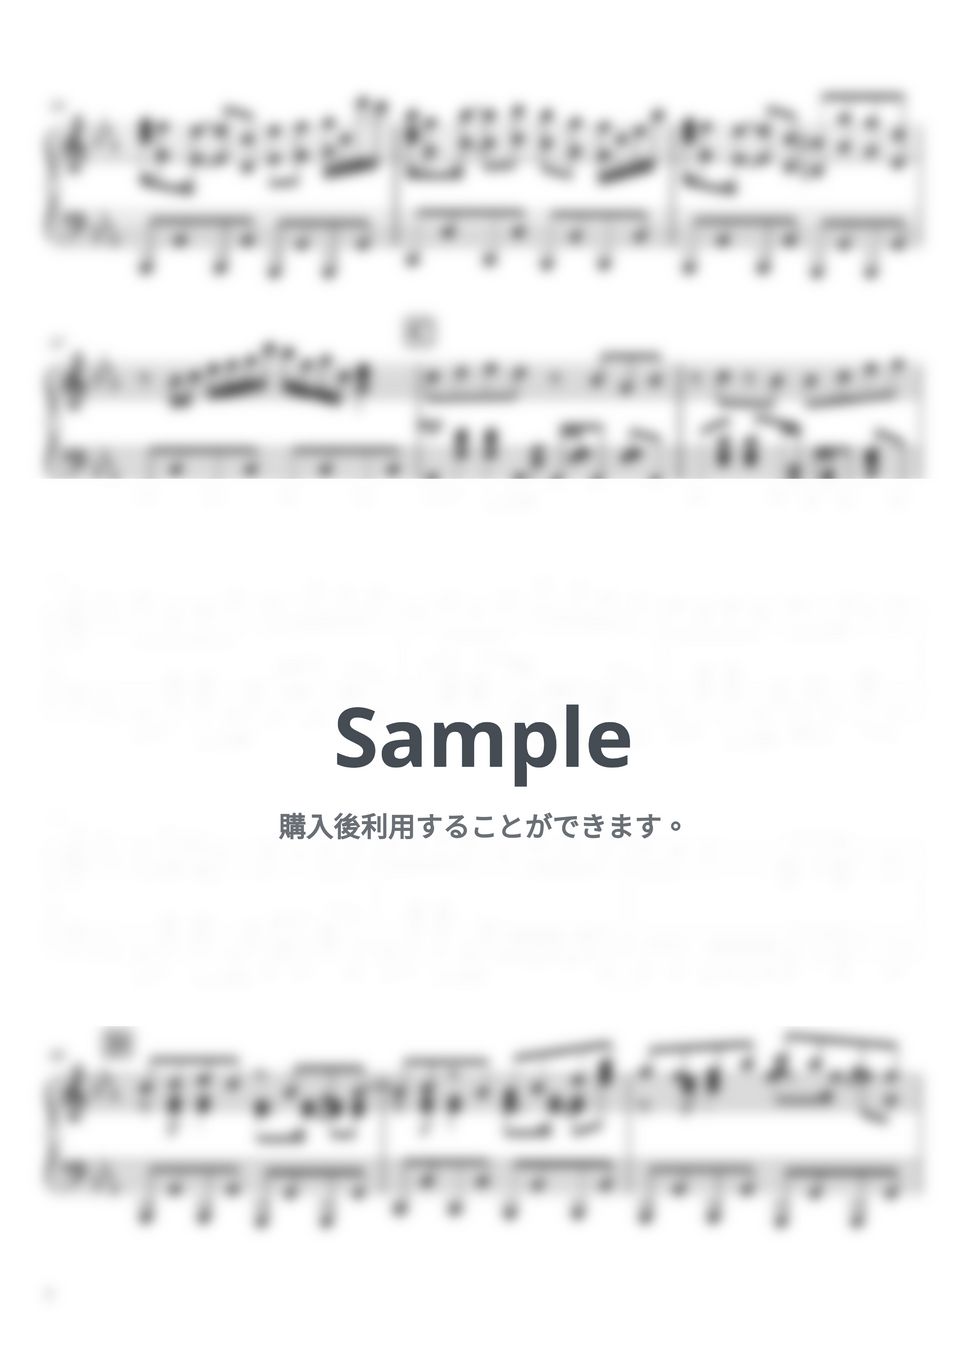 YOASOBI - 夜に駆ける (ピアノ,YOASOBI,弾き語り) by ピアノ猫